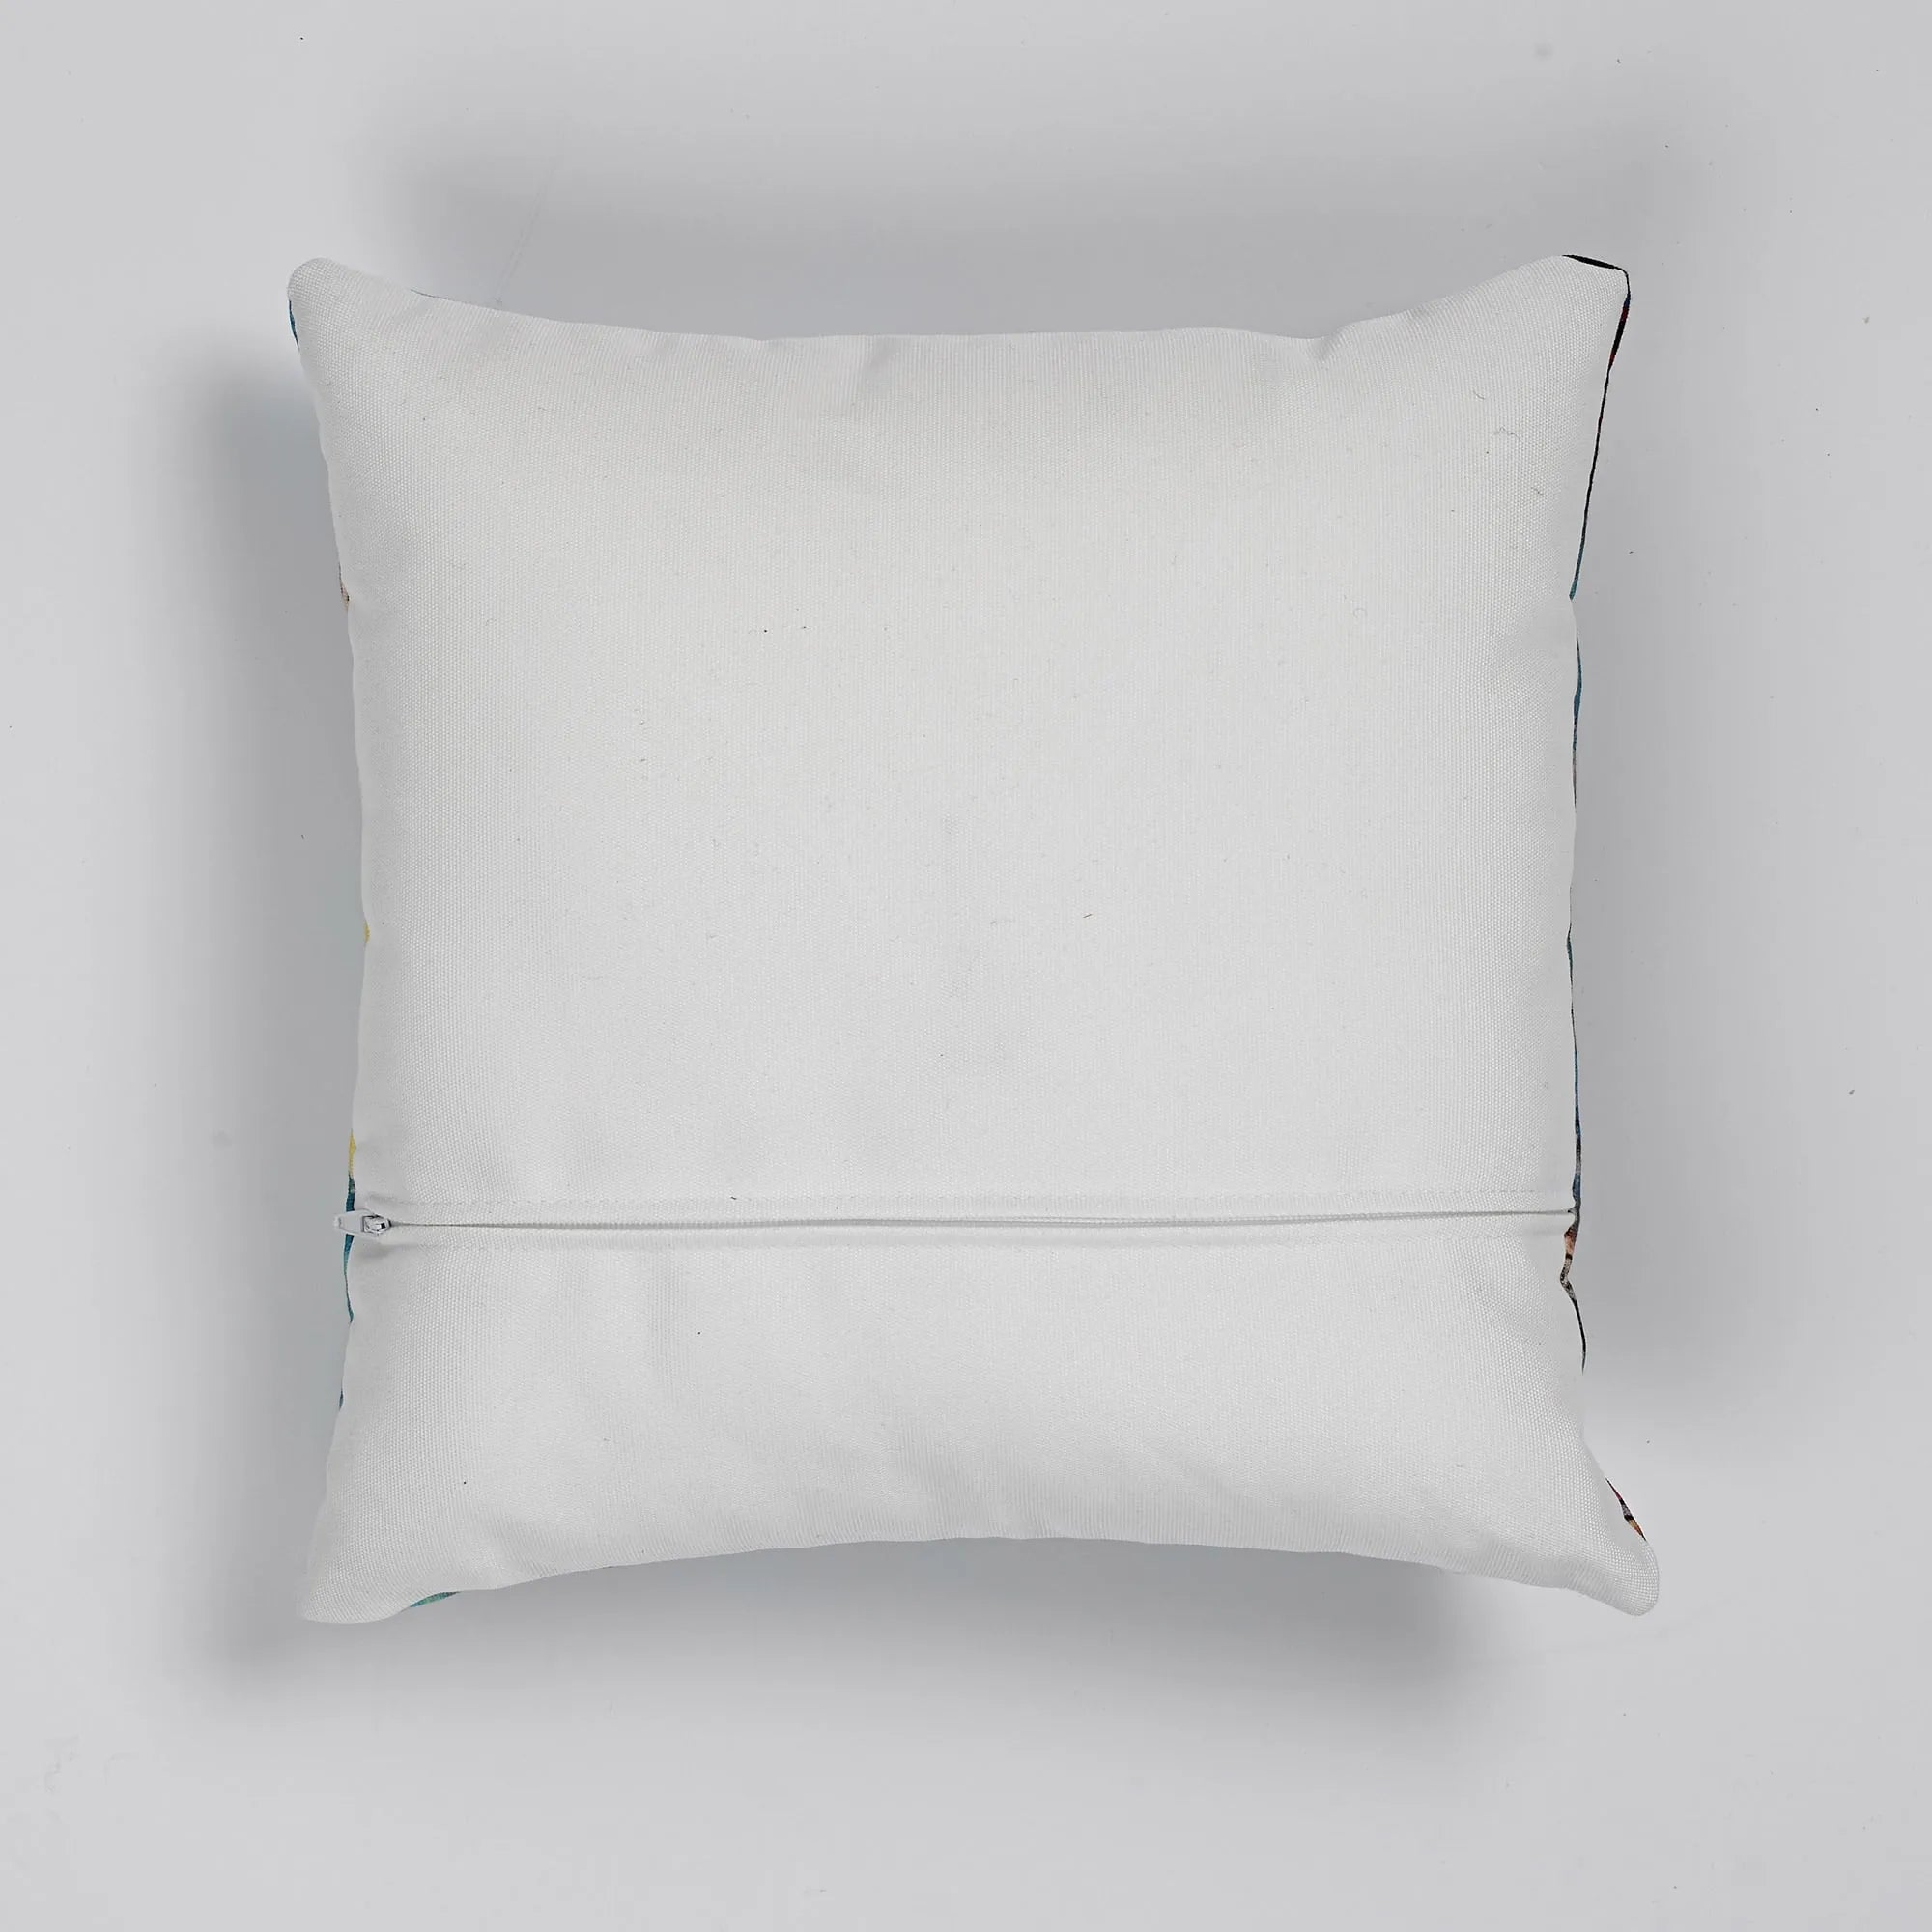 Hygieia - Gustav Klimt Cushion - Decorative Throw Pillow - Throw Pillows - Aesthetic Art